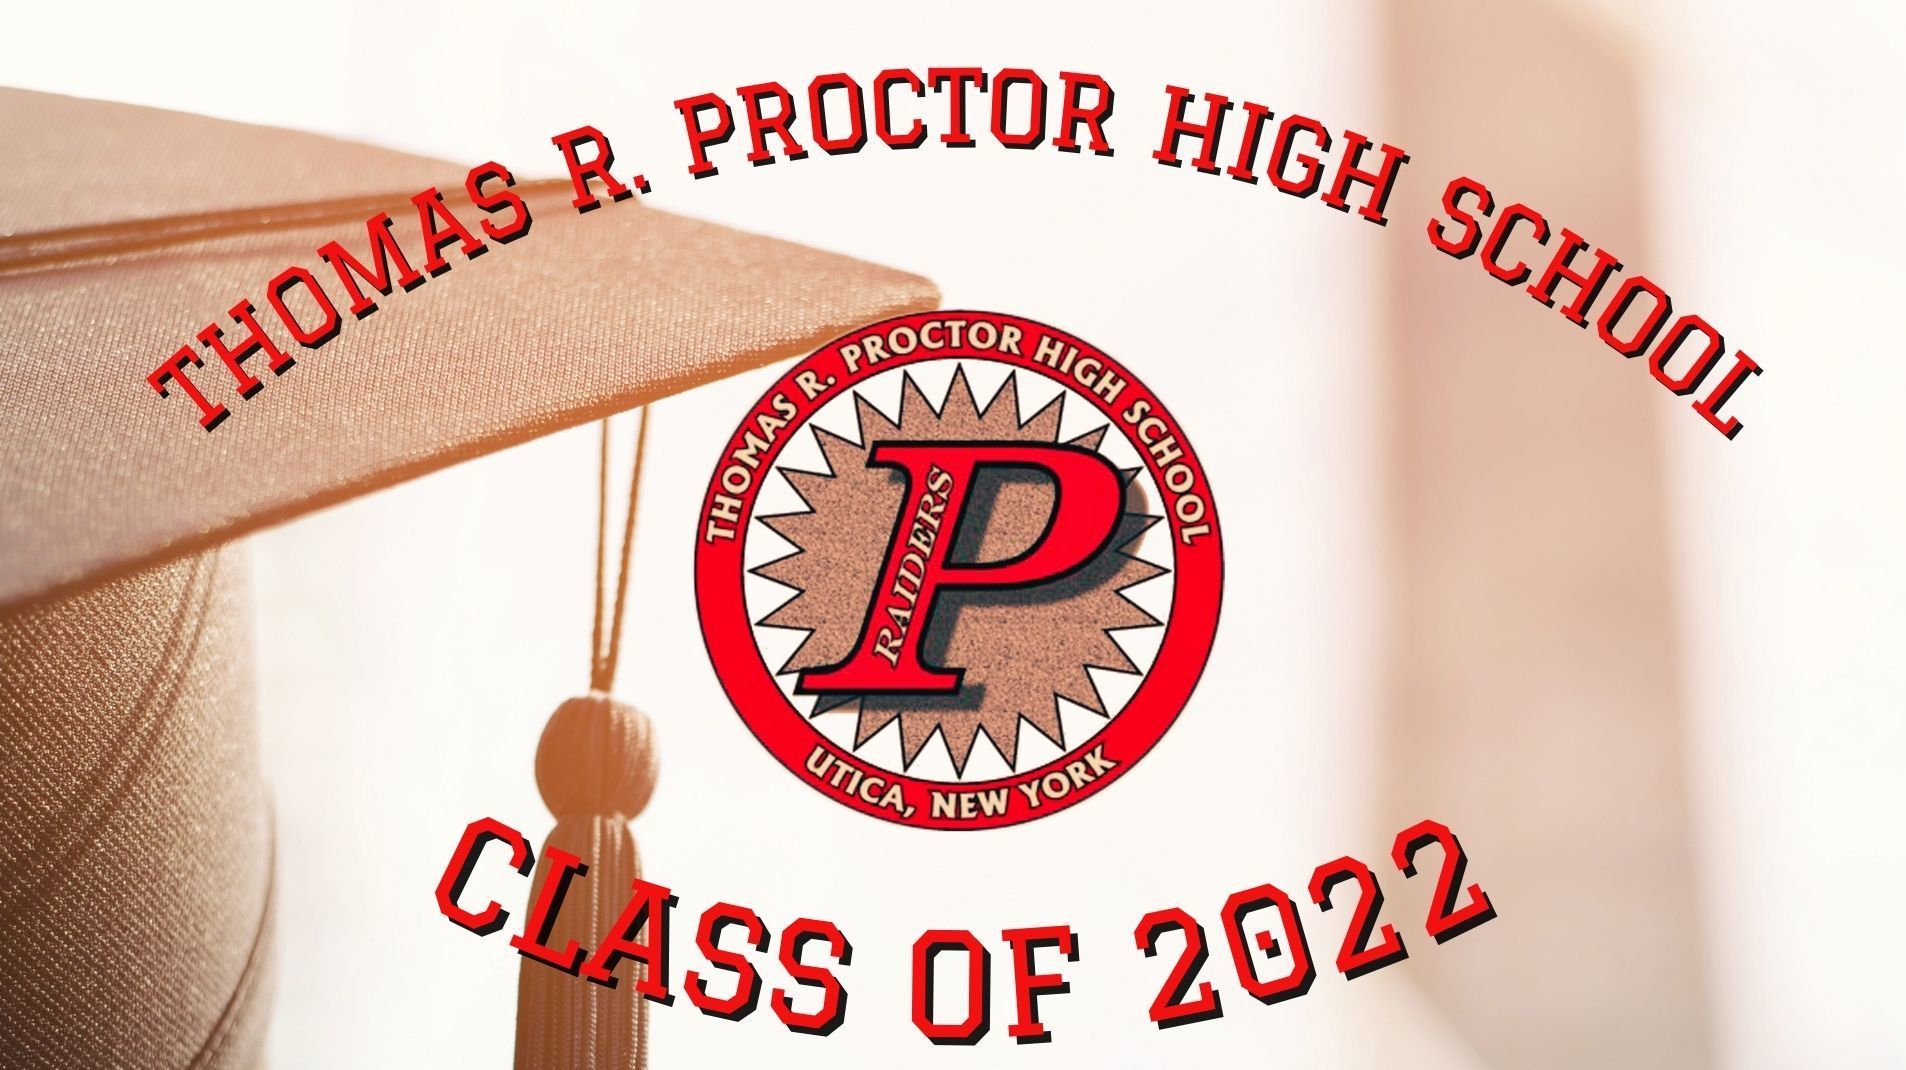 Thomas R. Proctor Class of 2022 Graduation on Livestream